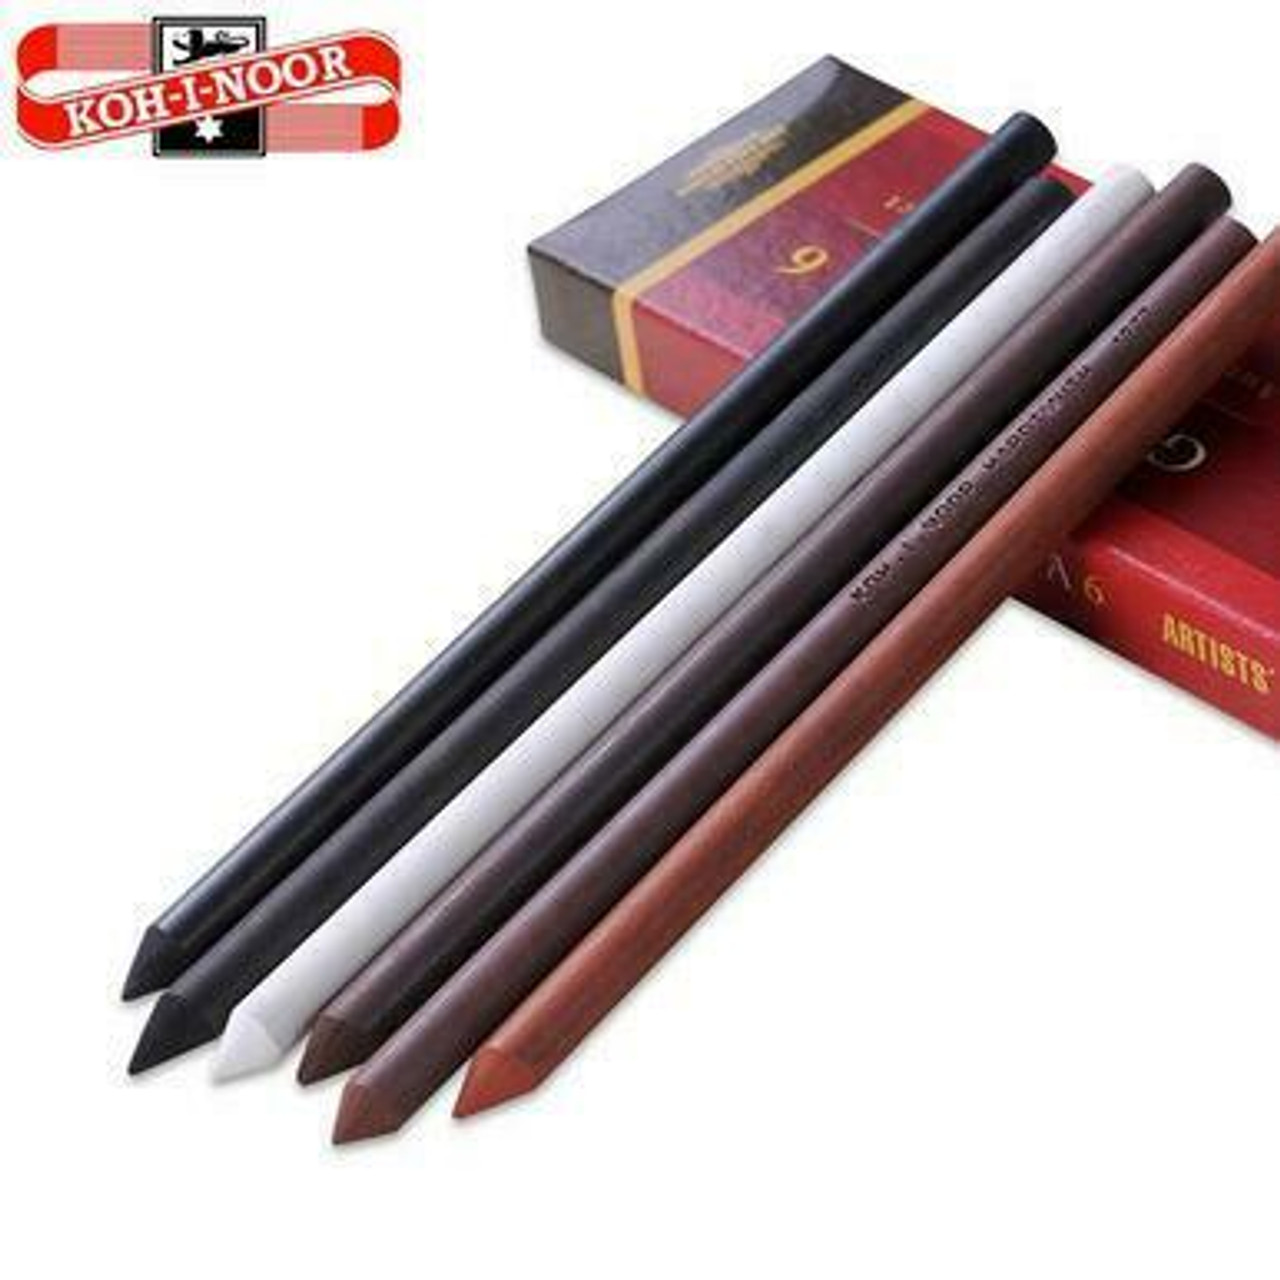 Koh I Noor Clutch Pencil - 5.6mm lead Charcoal soft